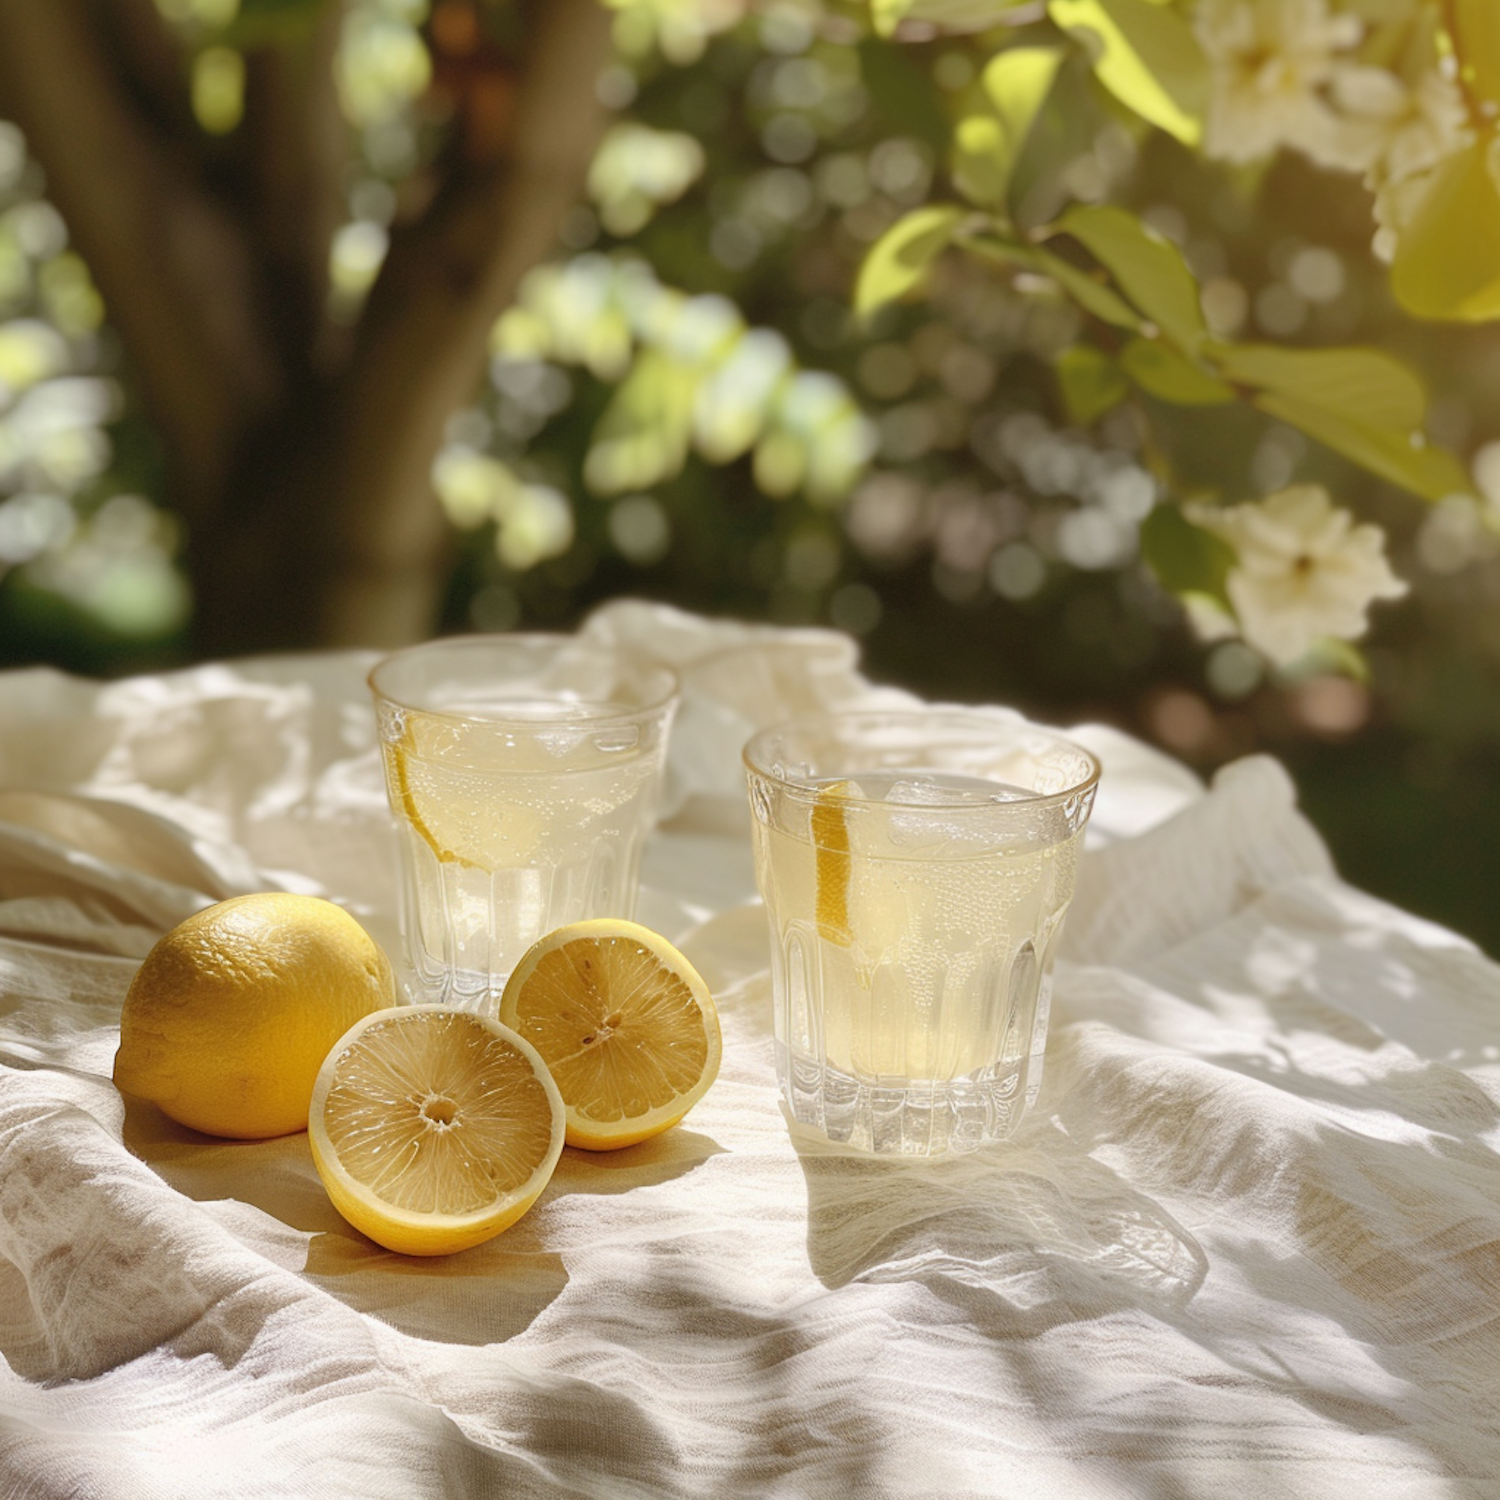 Refreshing Lemon Beverage Outdoors